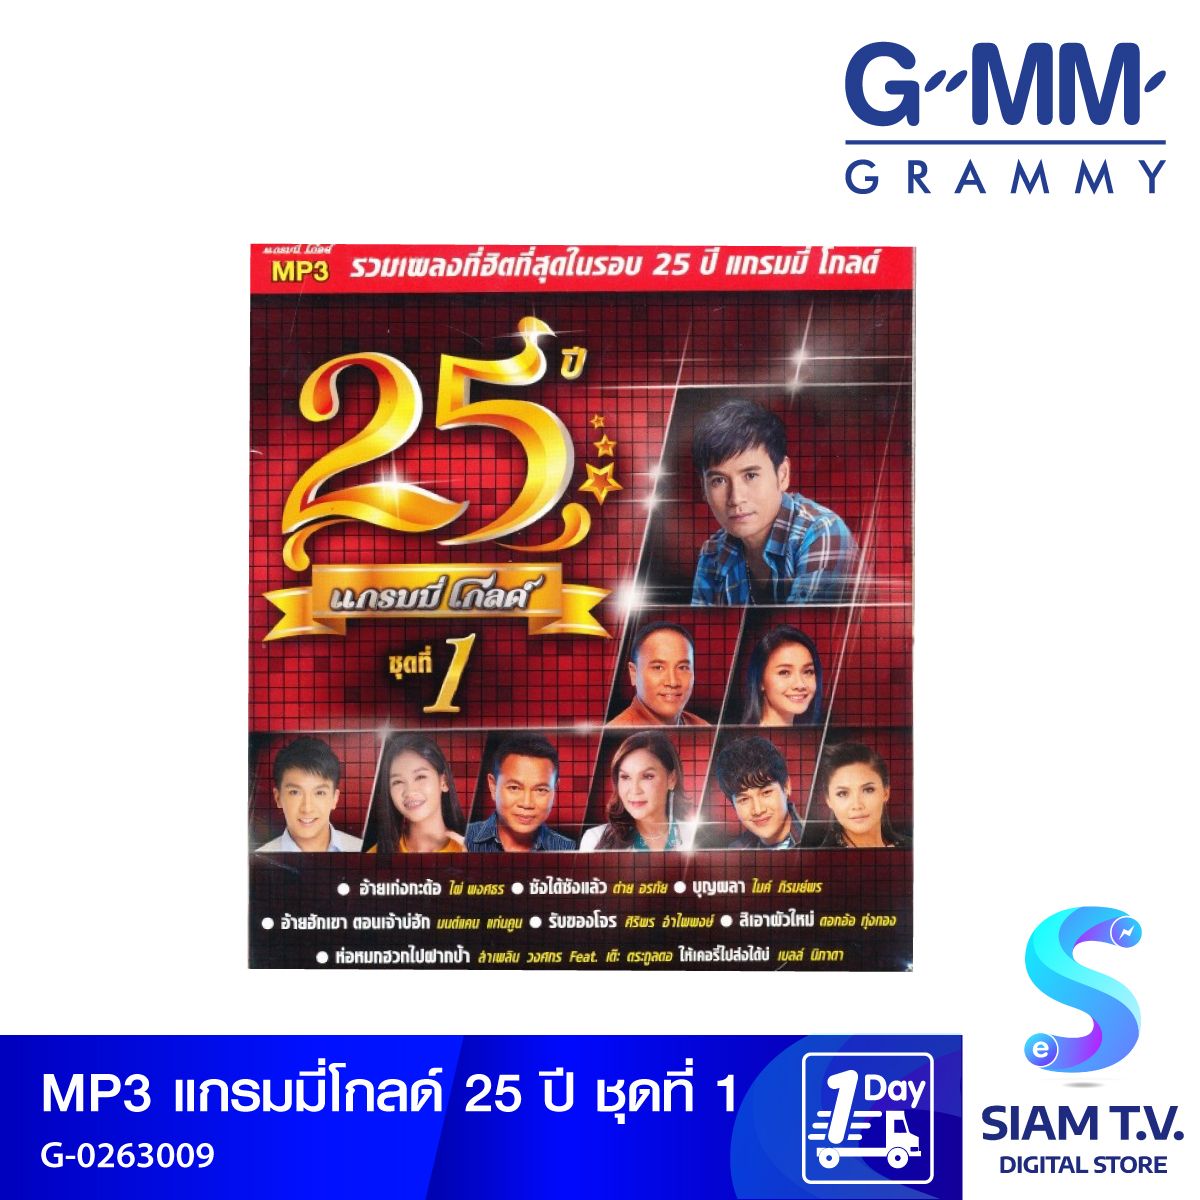 GMM GRAMMY MP3 แกรมมี่โกลด์25ปีชุด1